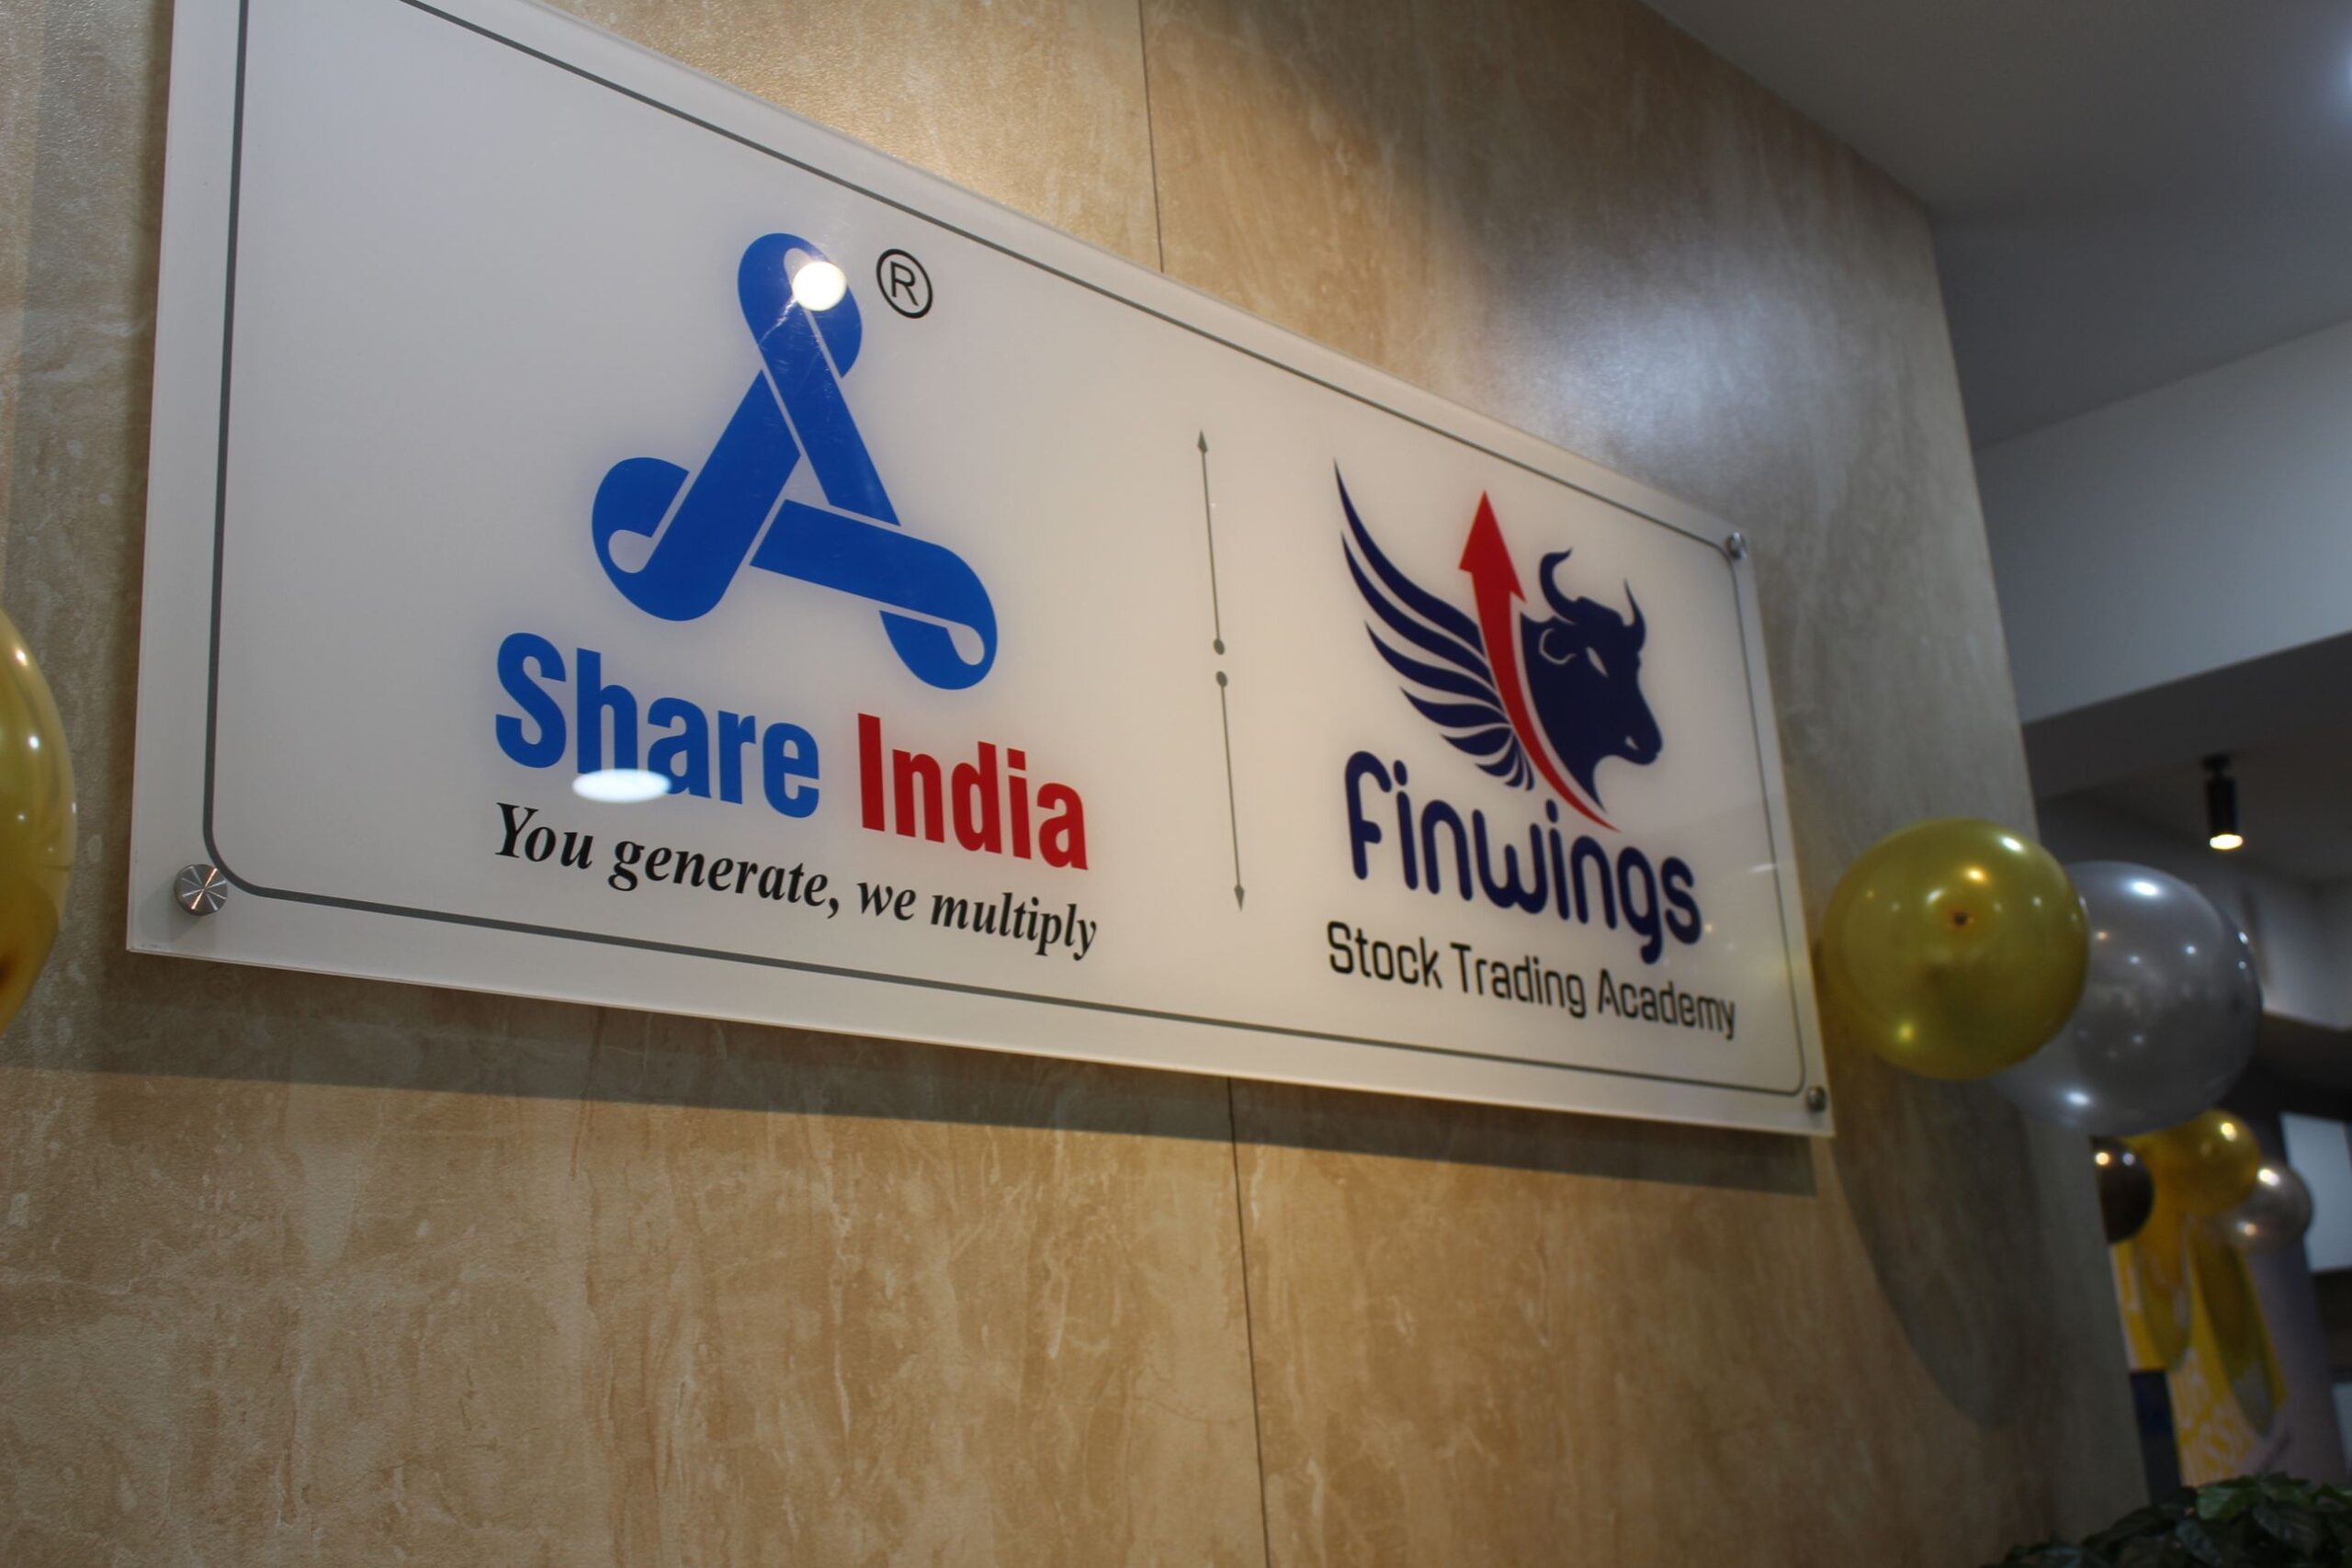 Share India & Finwings